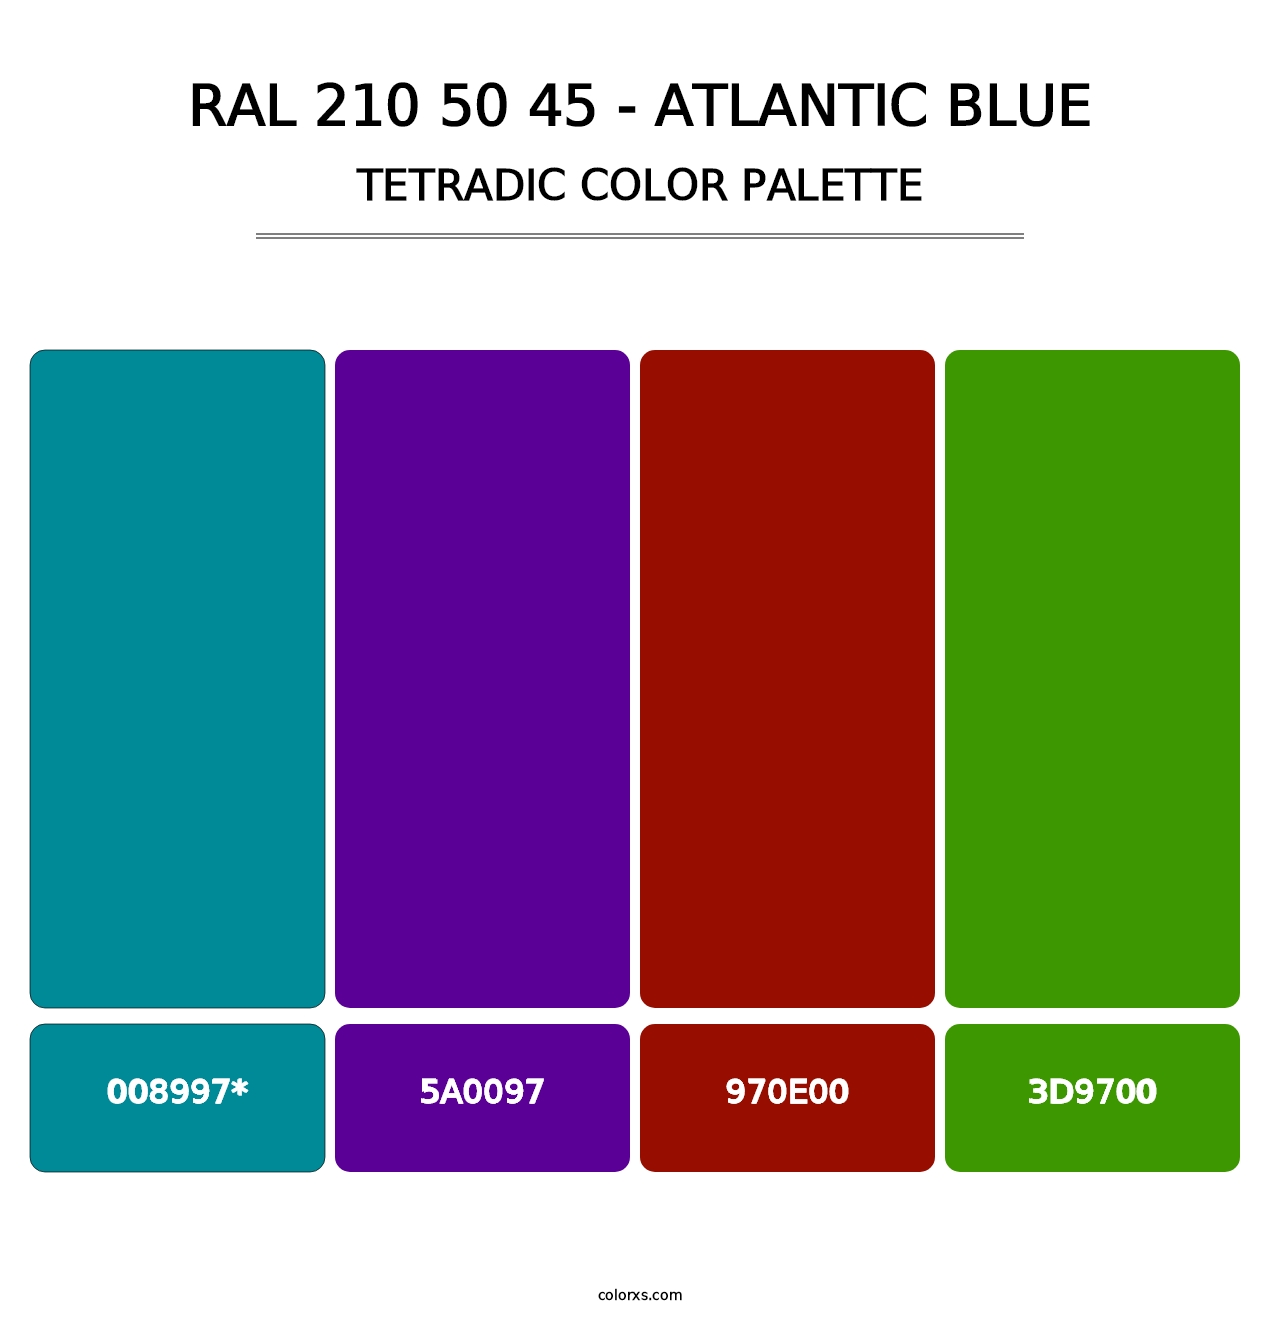 RAL 210 50 45 - Atlantic Blue - Tetradic Color Palette